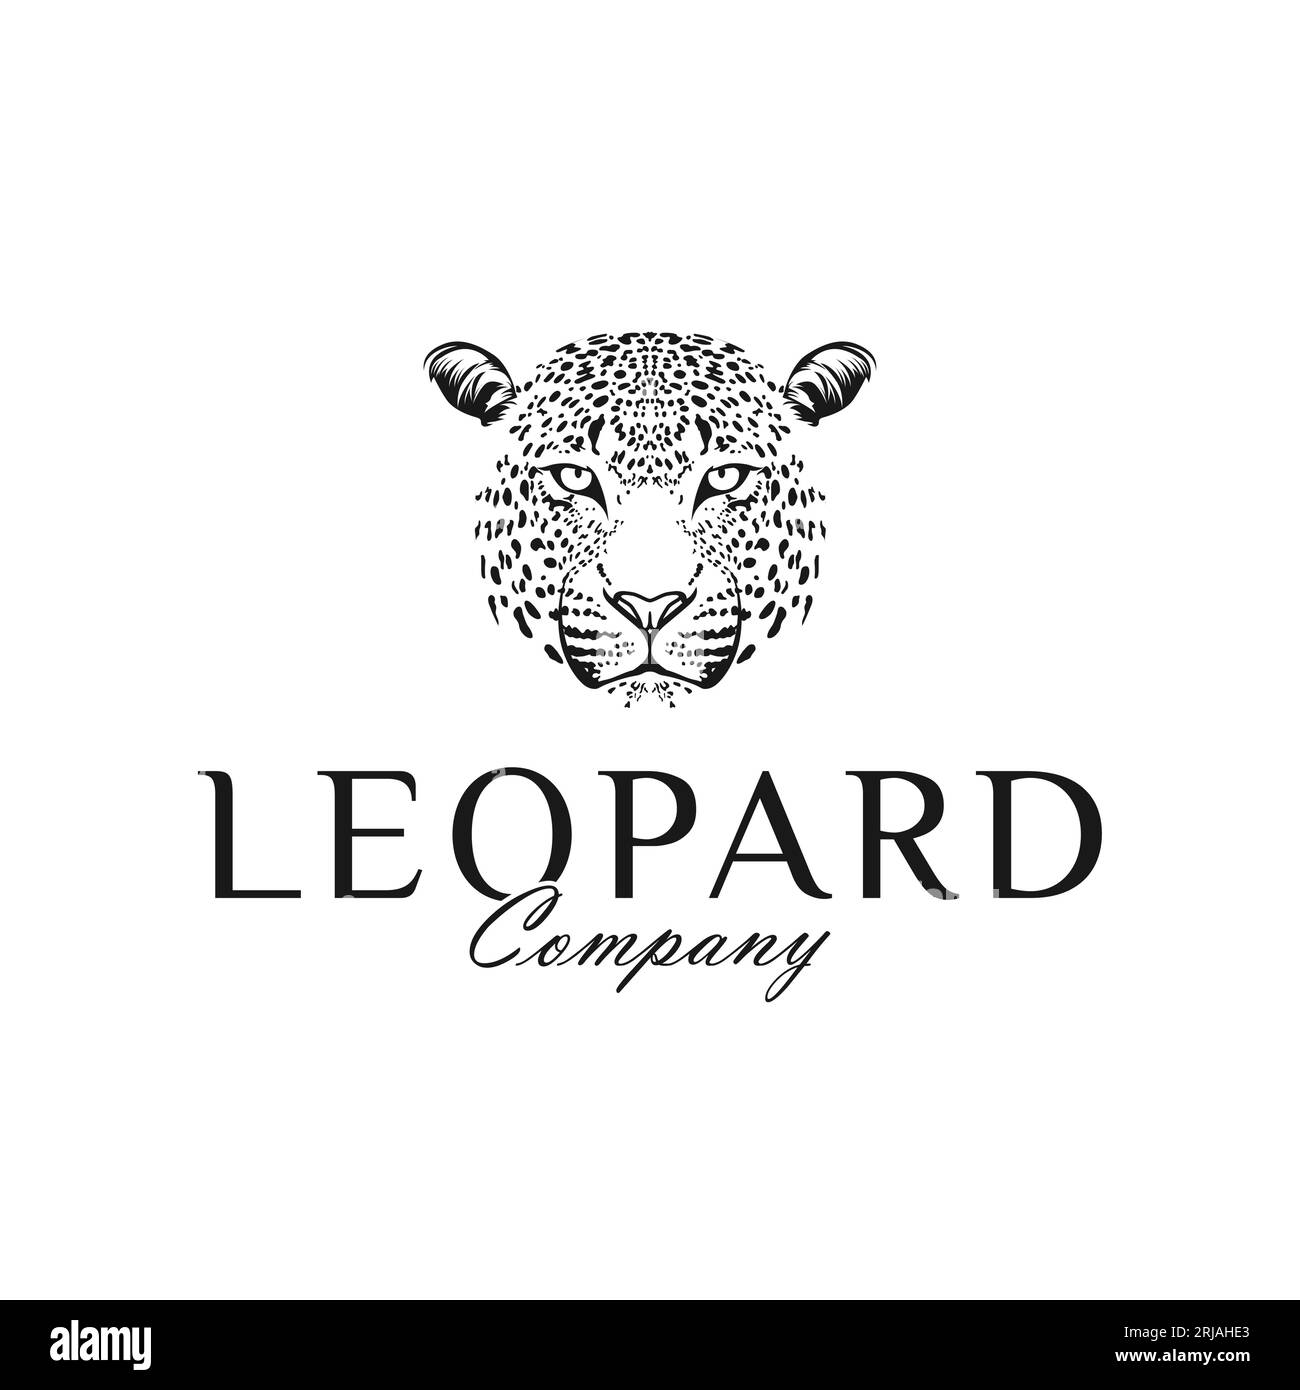 Leopard Cheetah Face Logo Design Inspiration Stock Vector Image